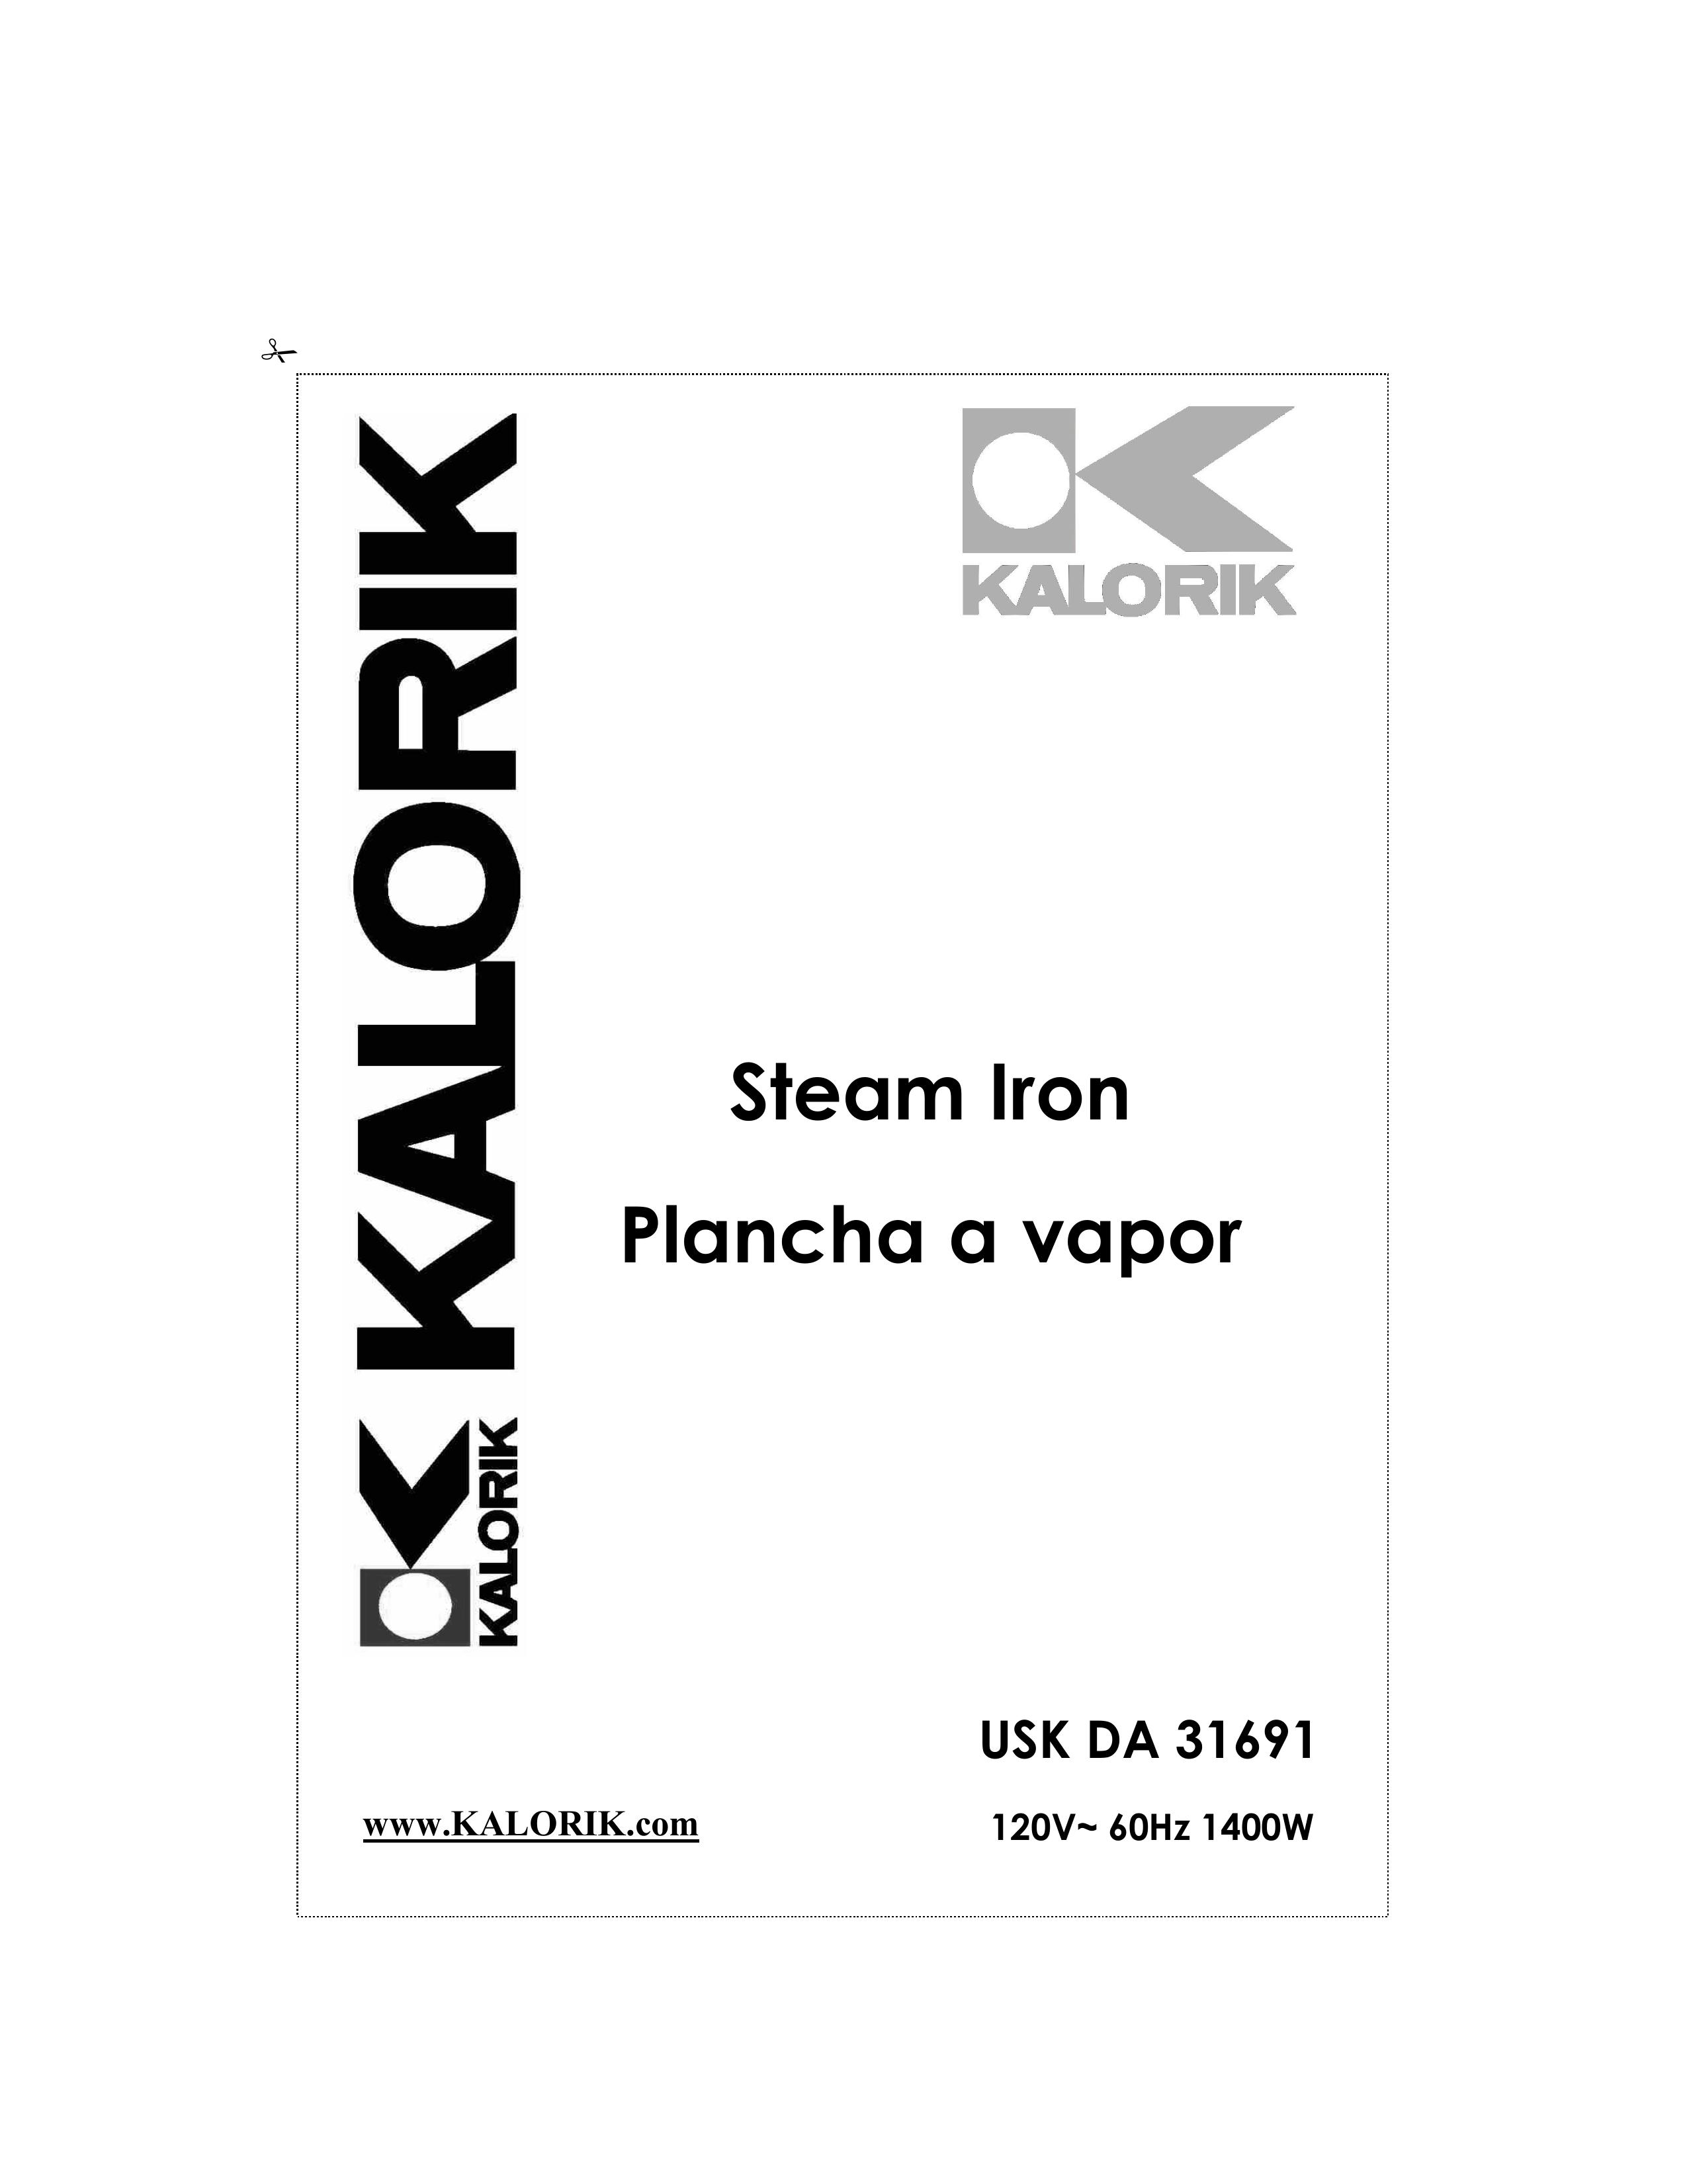 Kalorik USK DA 31691 Iron User Manual